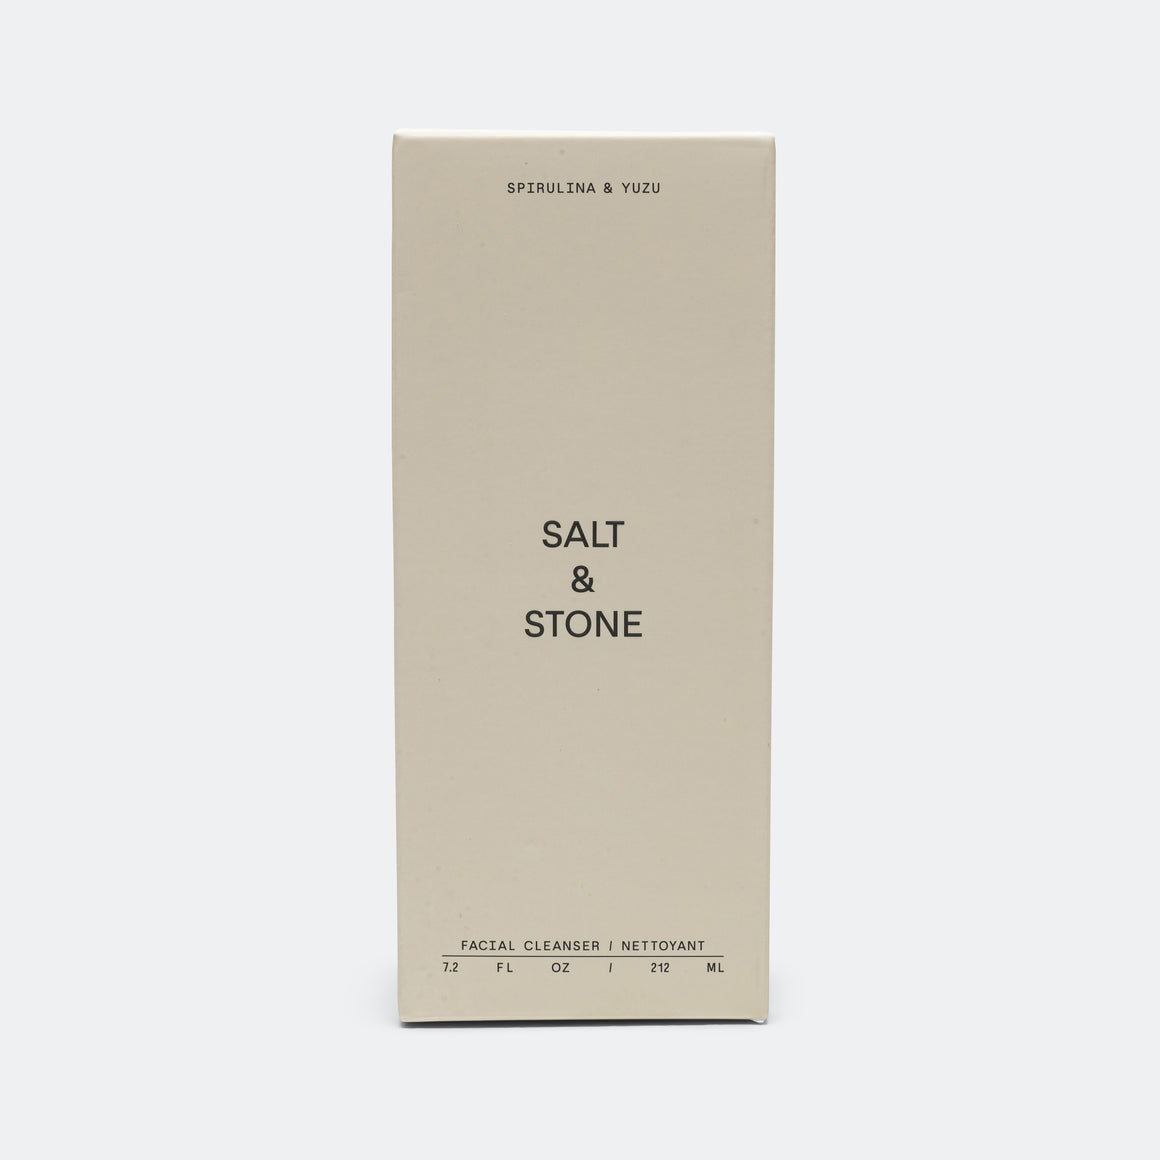 Salt & Stone - Facial Cleanser - Spirulina & Yuzu - Up There Athletics